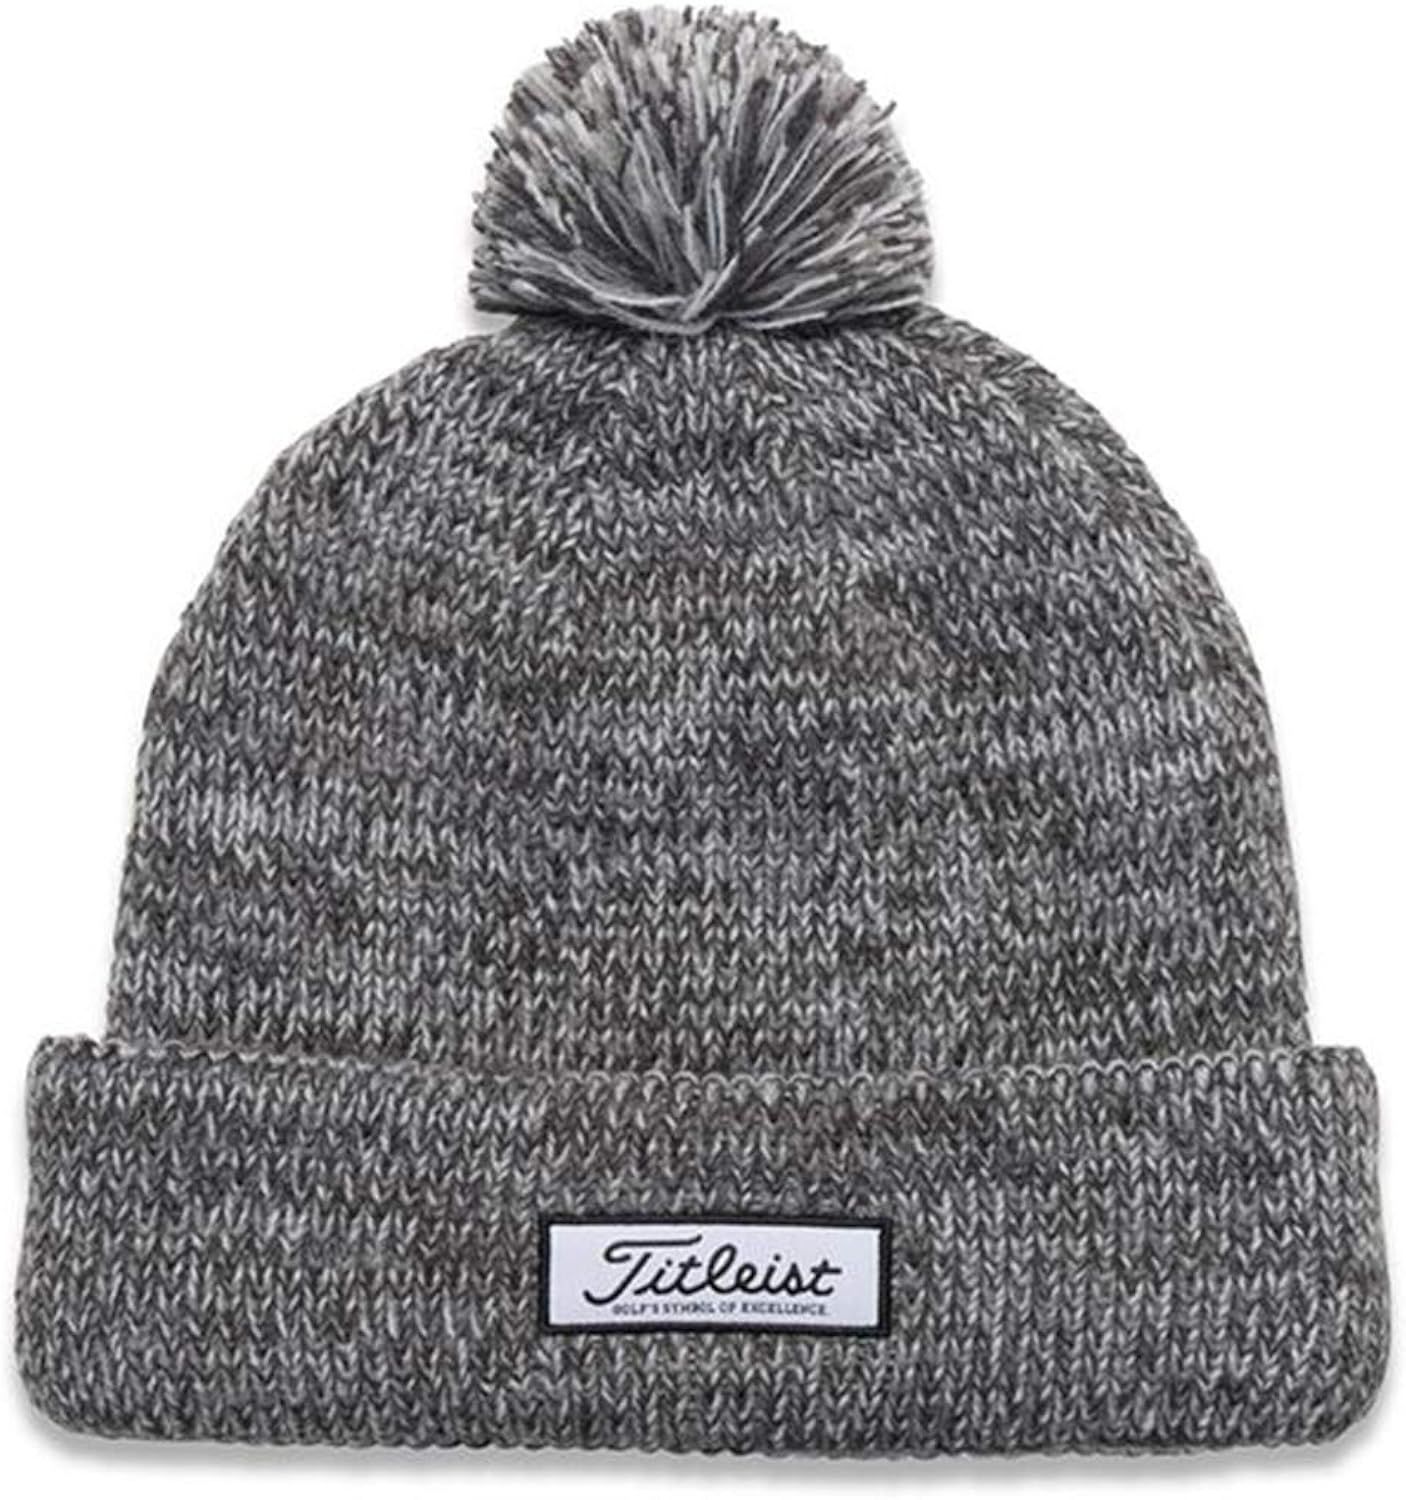 Titleist Winter Golf Hats and Beanies (Pompom Winter Hat, Beanie) | Amazon (US)